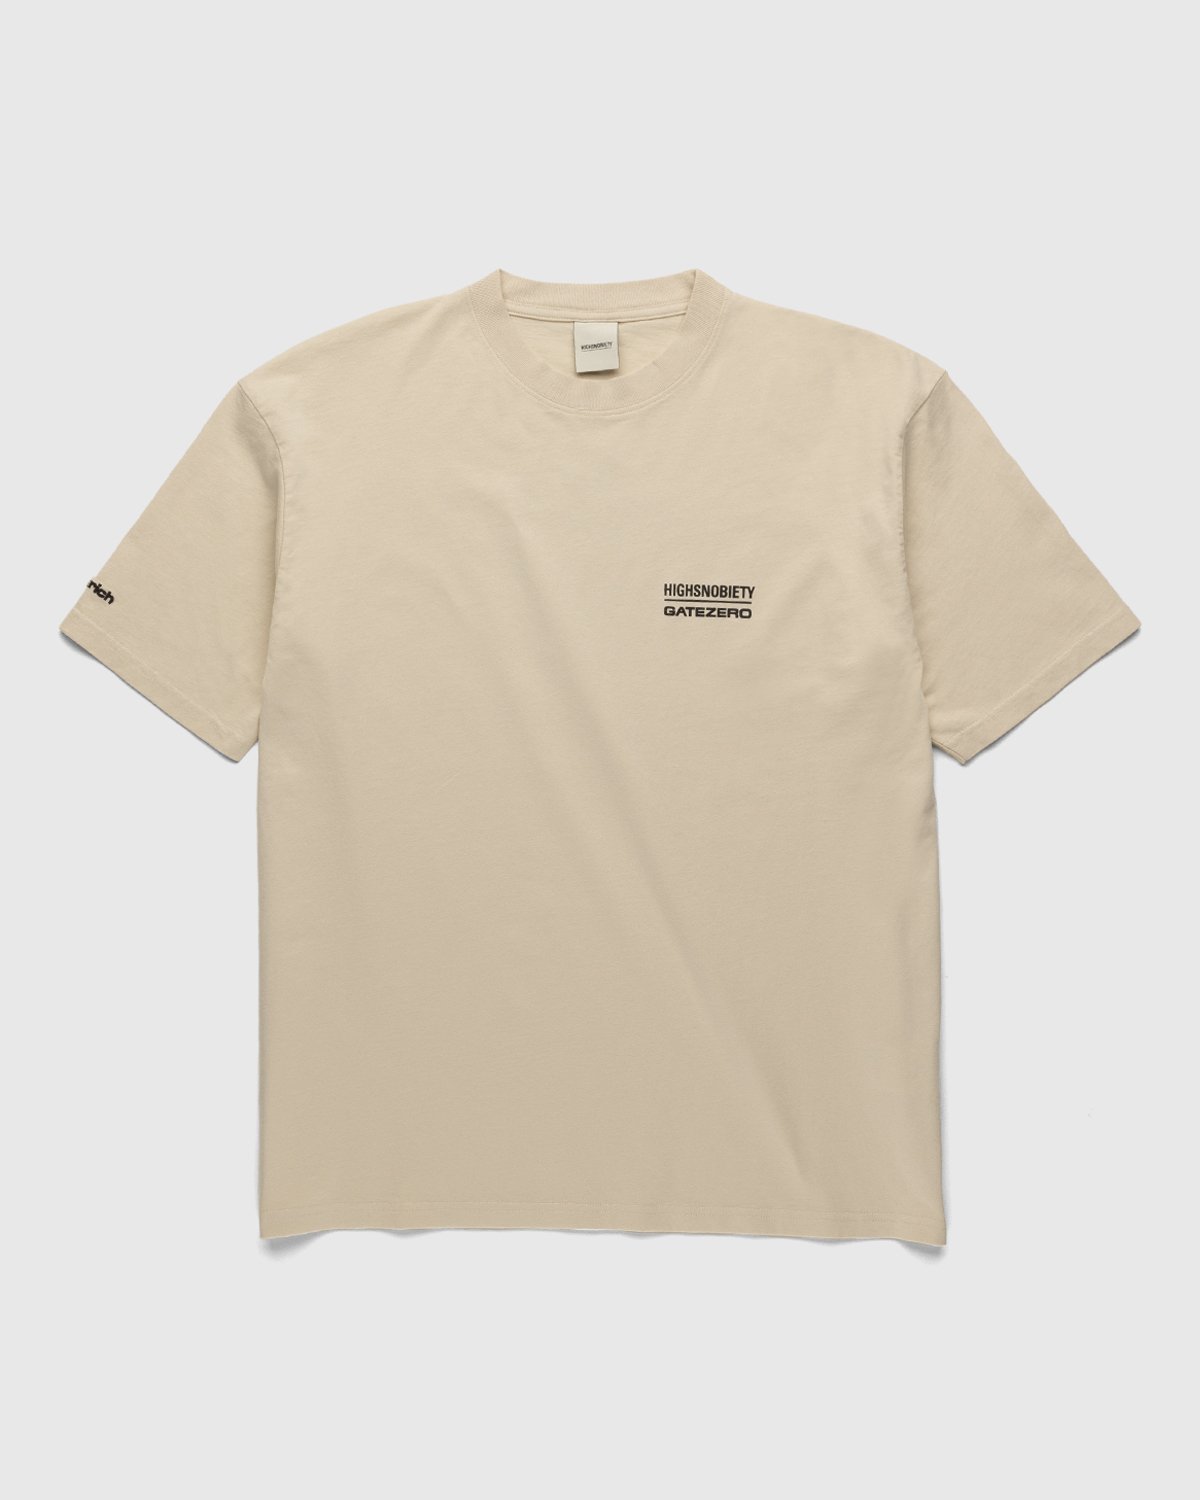 Highsnobiety - GATEZERO City Series 2 T-Shirt Eggshell - Clothing - White - Image 2